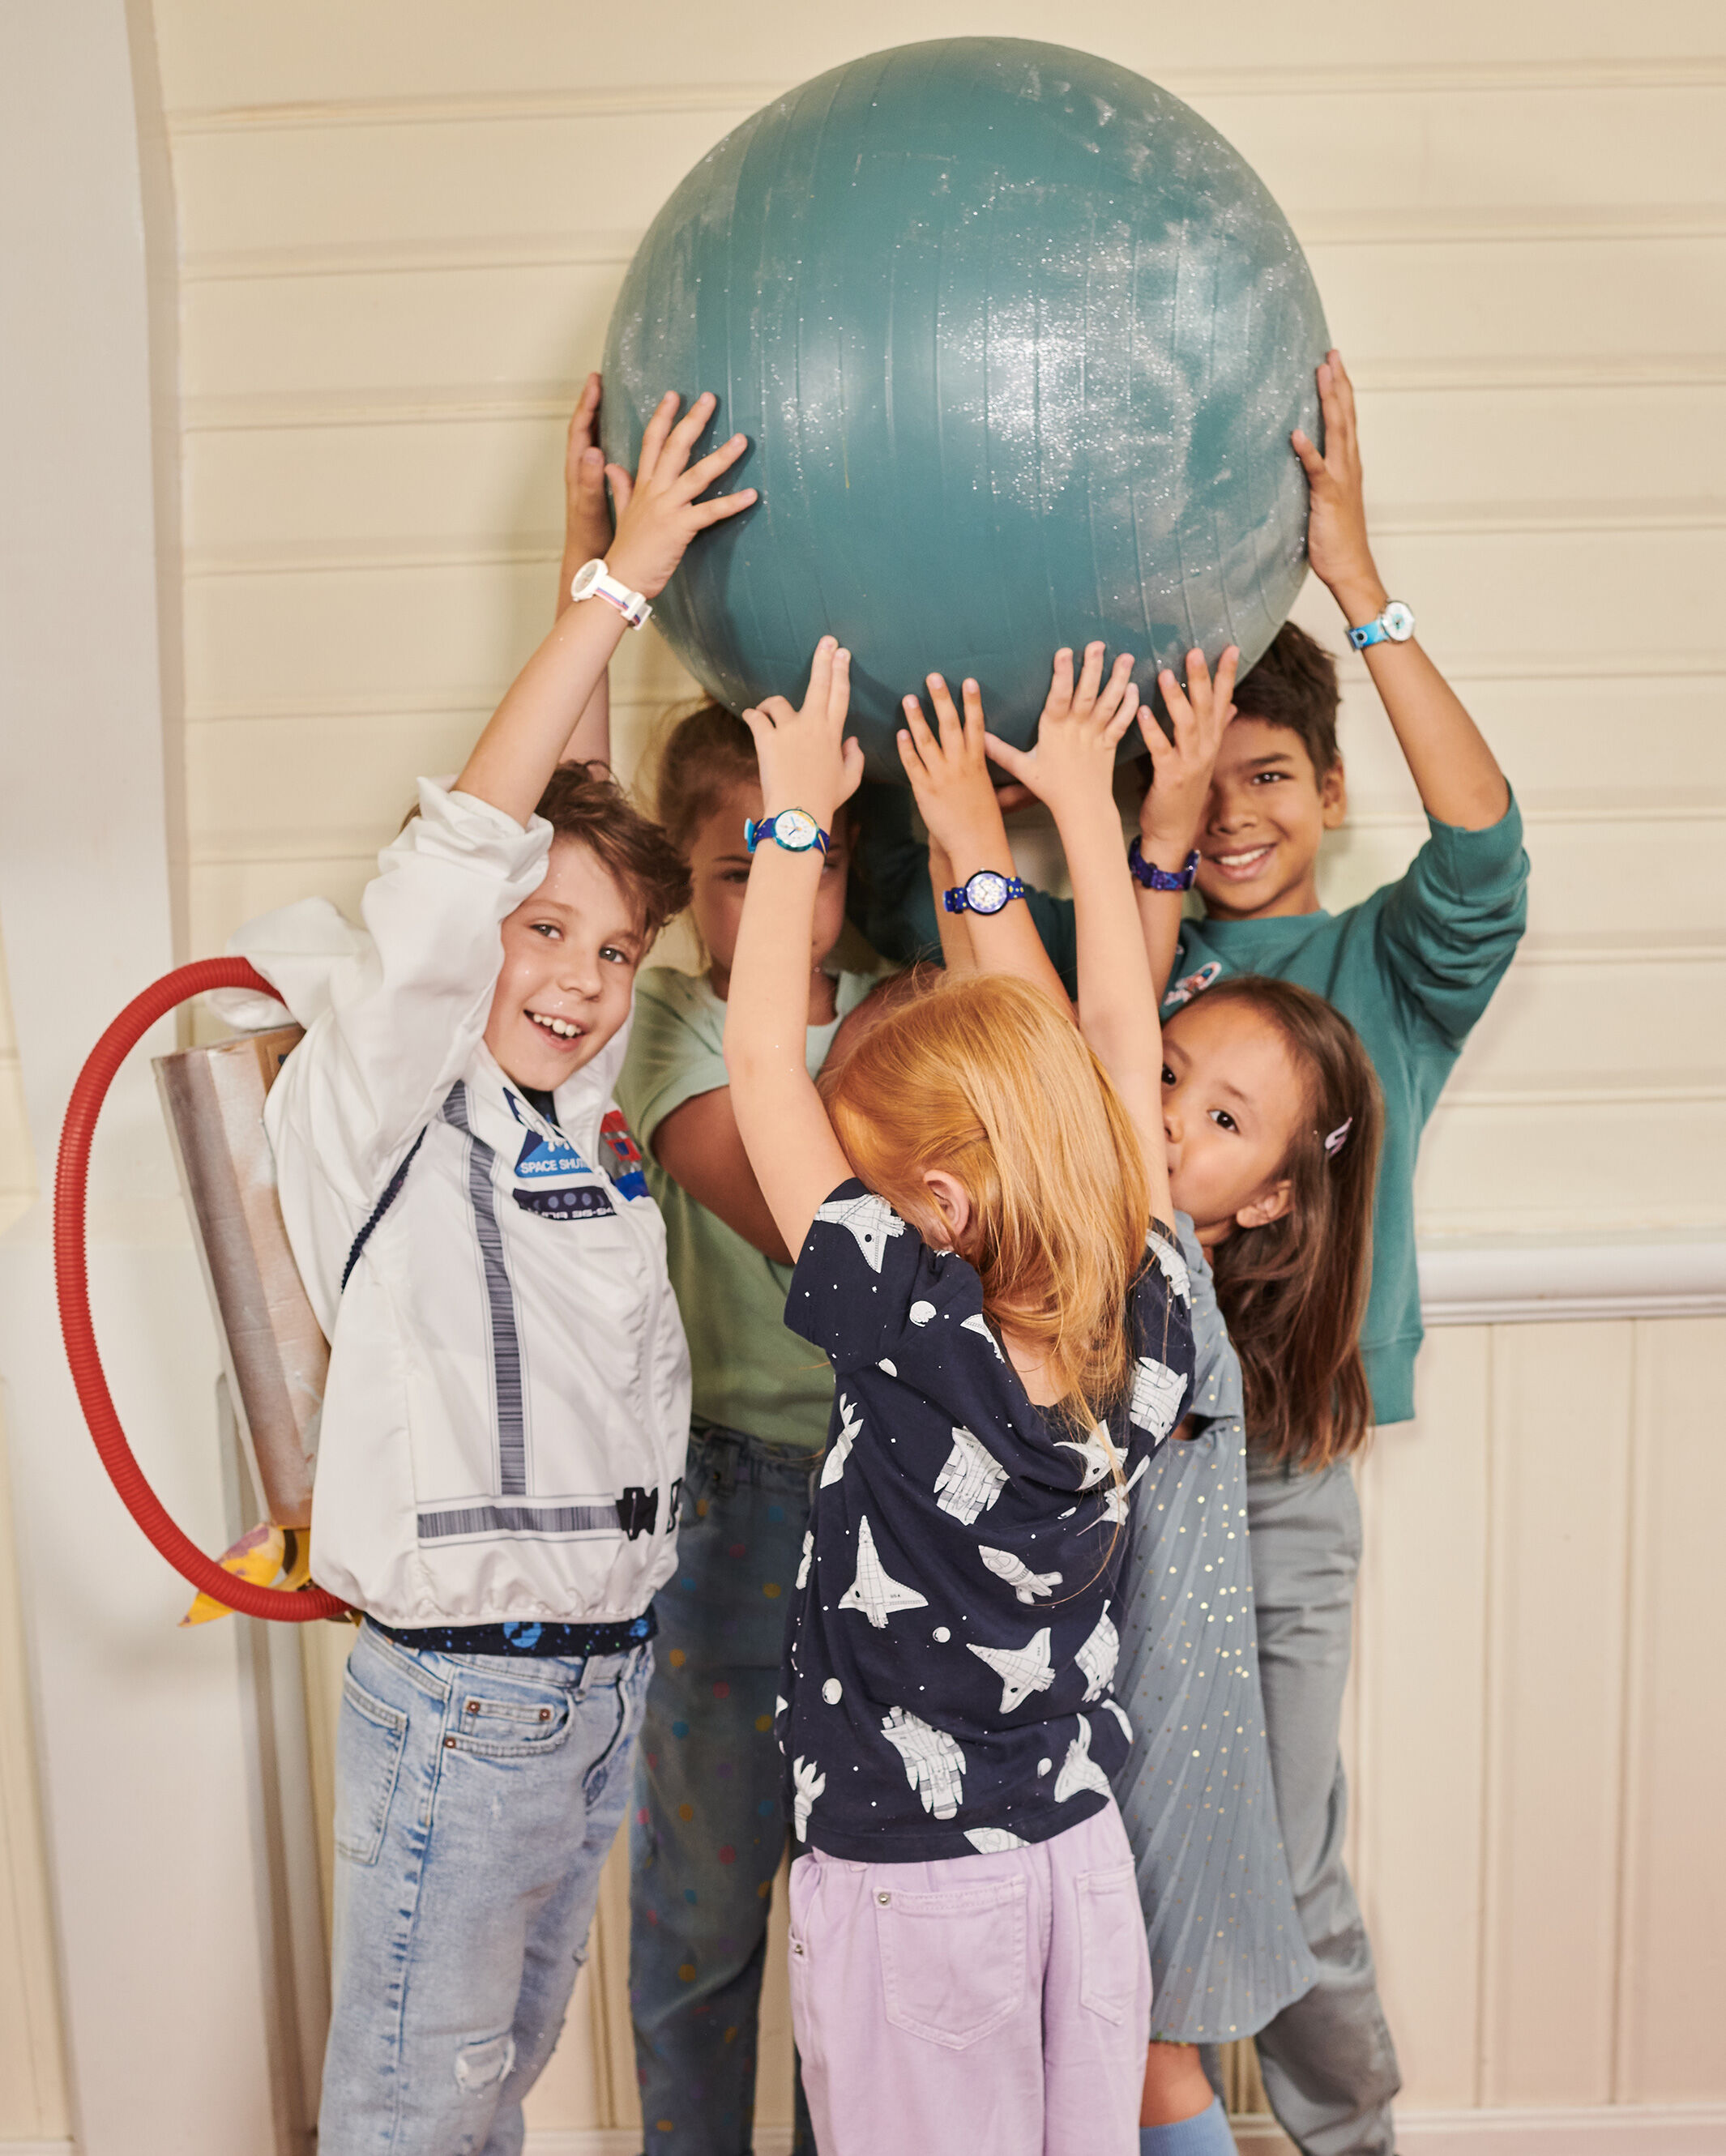 Kids holding a big ball